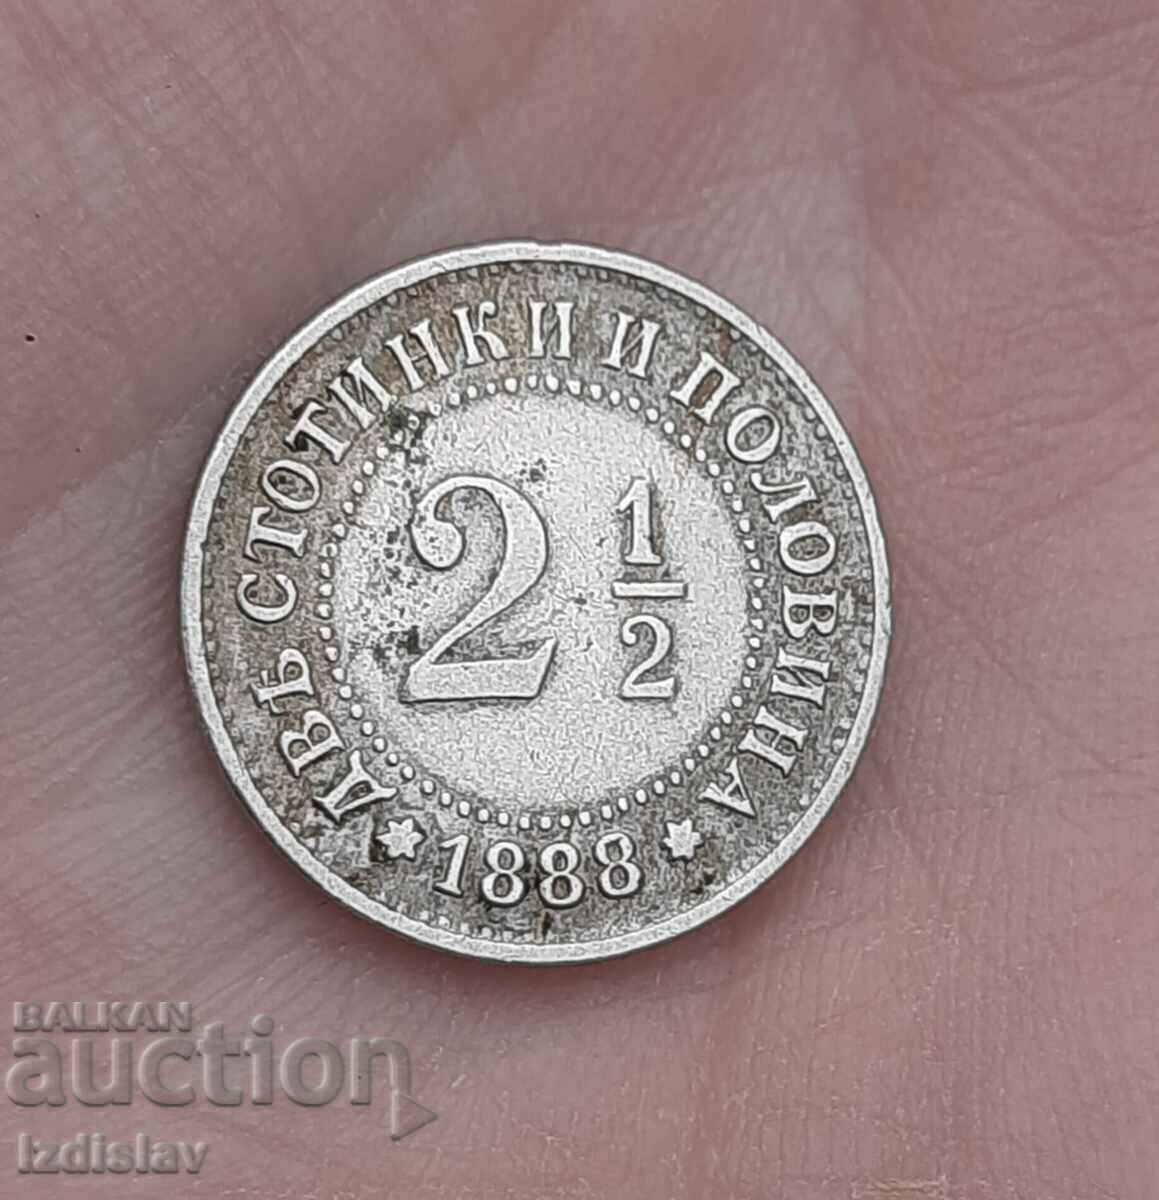 1888 2 și 1/2 cenți